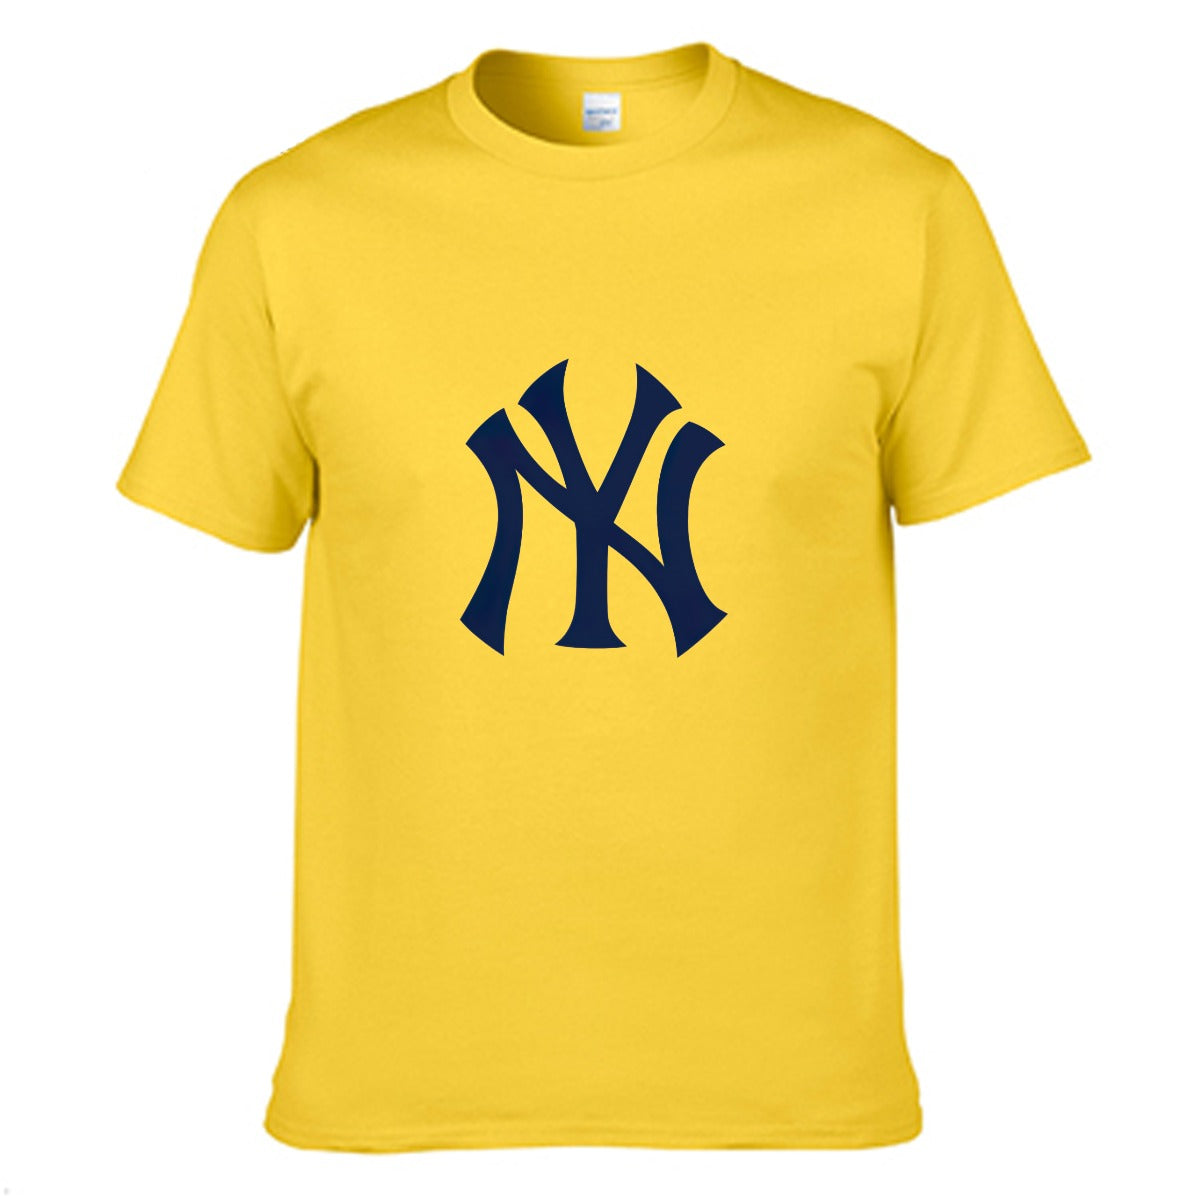 NY Men's T-shirt (100% Cotton) - T0355